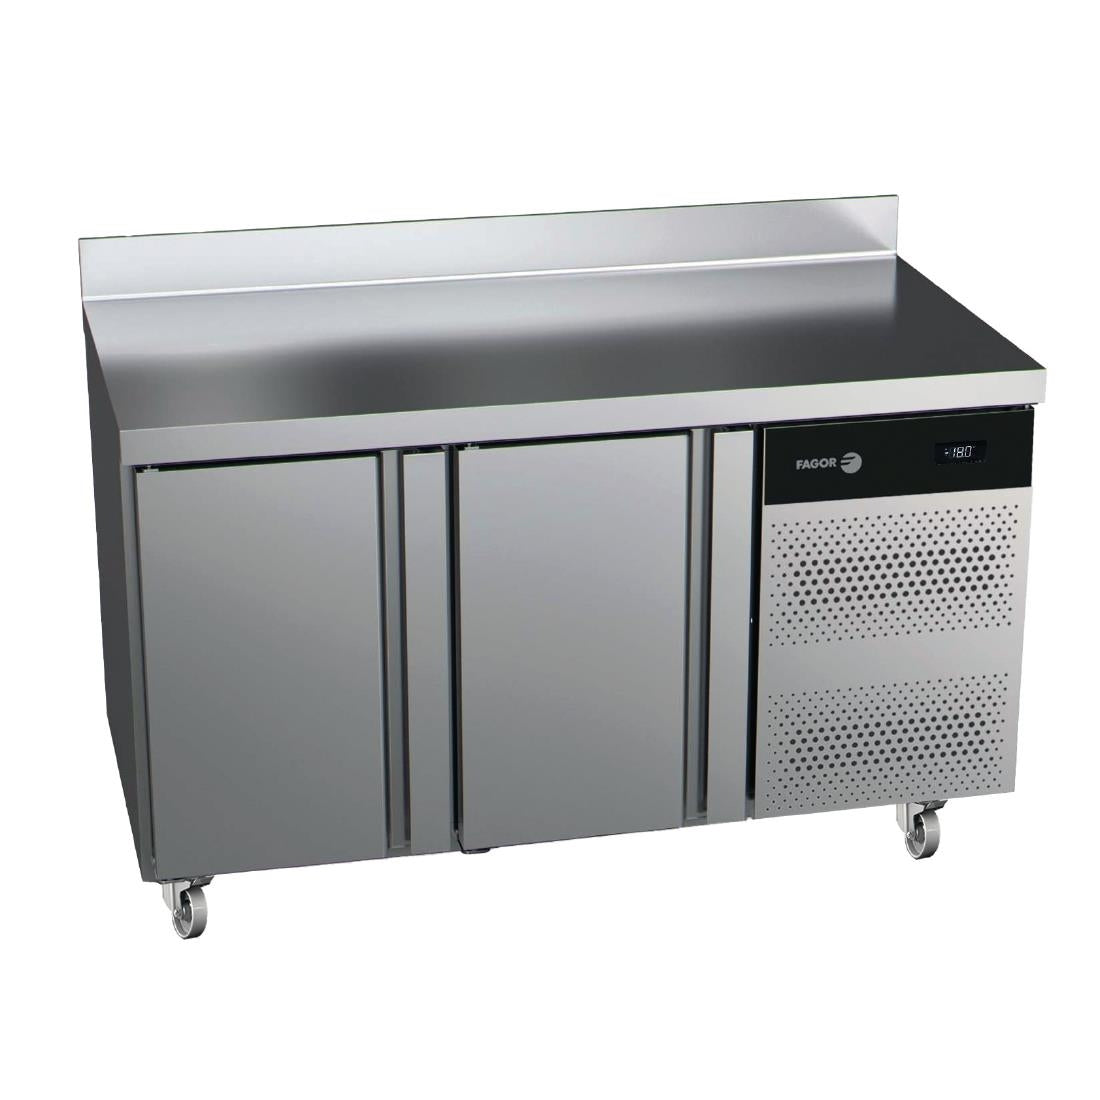 FU024 Fagor Concept 700 Gastronorm Freezer Counter 2 Door CCN-2G JD Catering Equipment Solutions Ltd